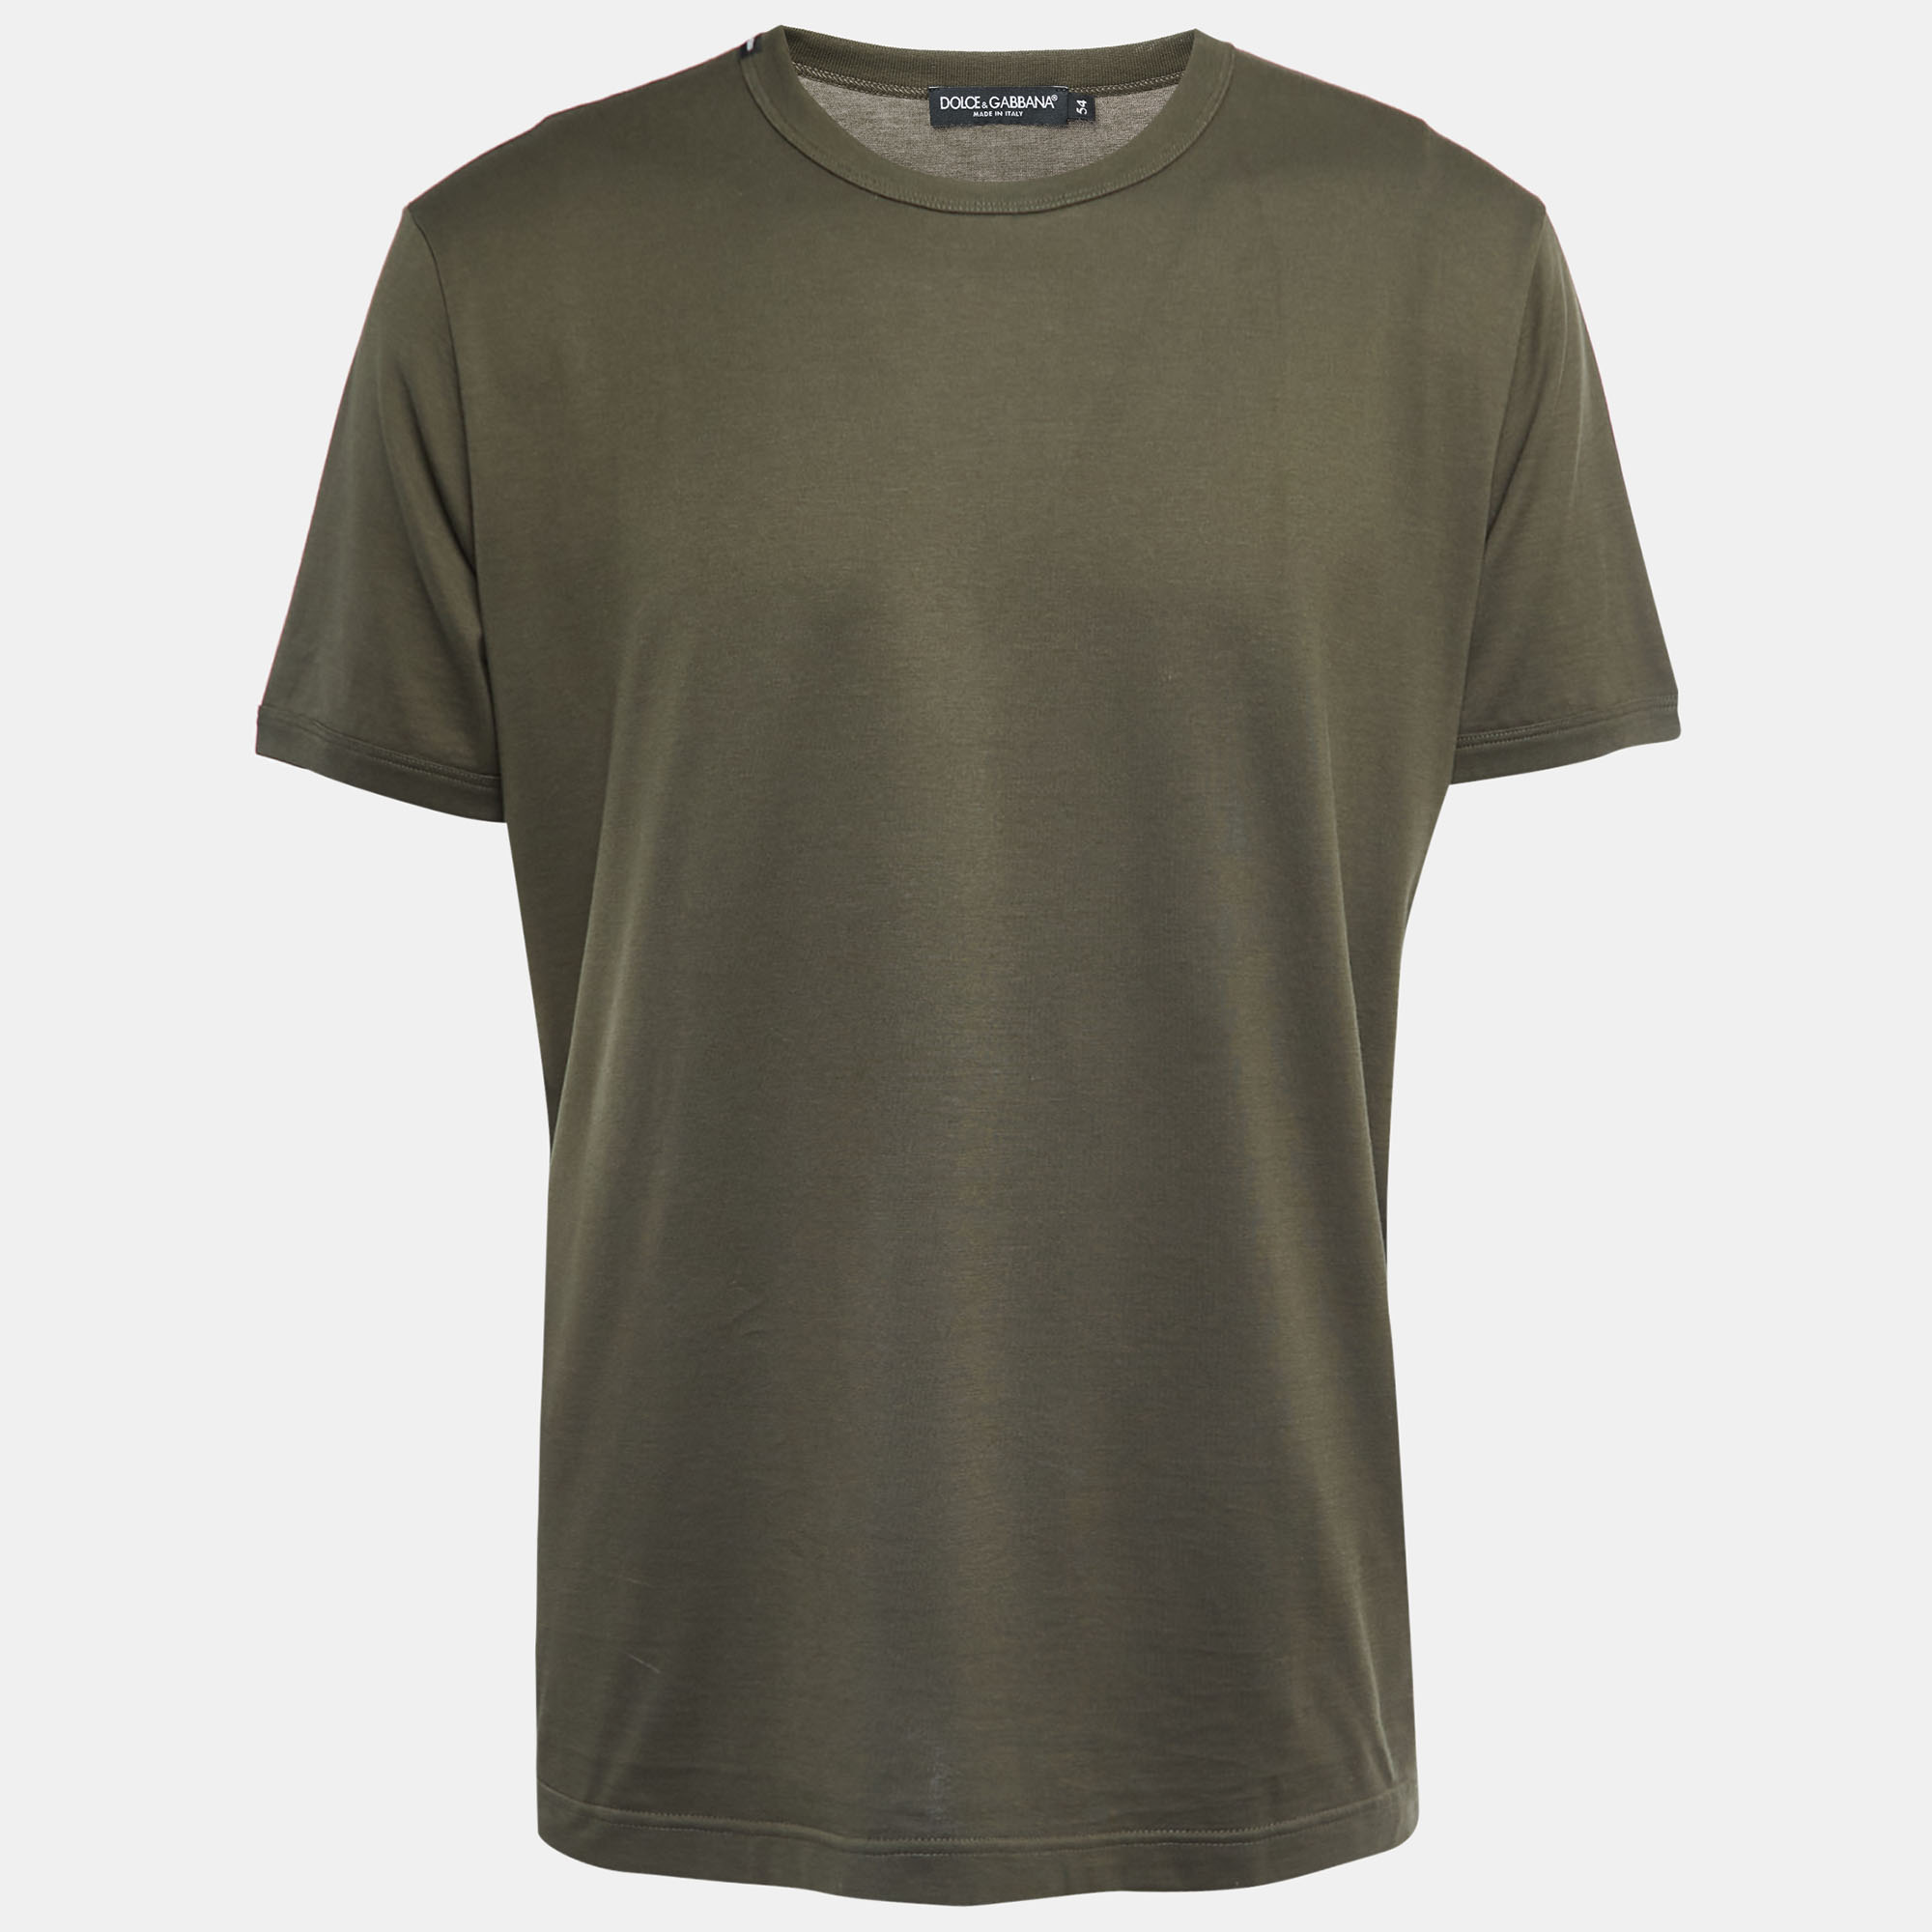 Dolce & Gabbana Military Green Cotton Crew Neck Half Sleeve T-Shirt XXL